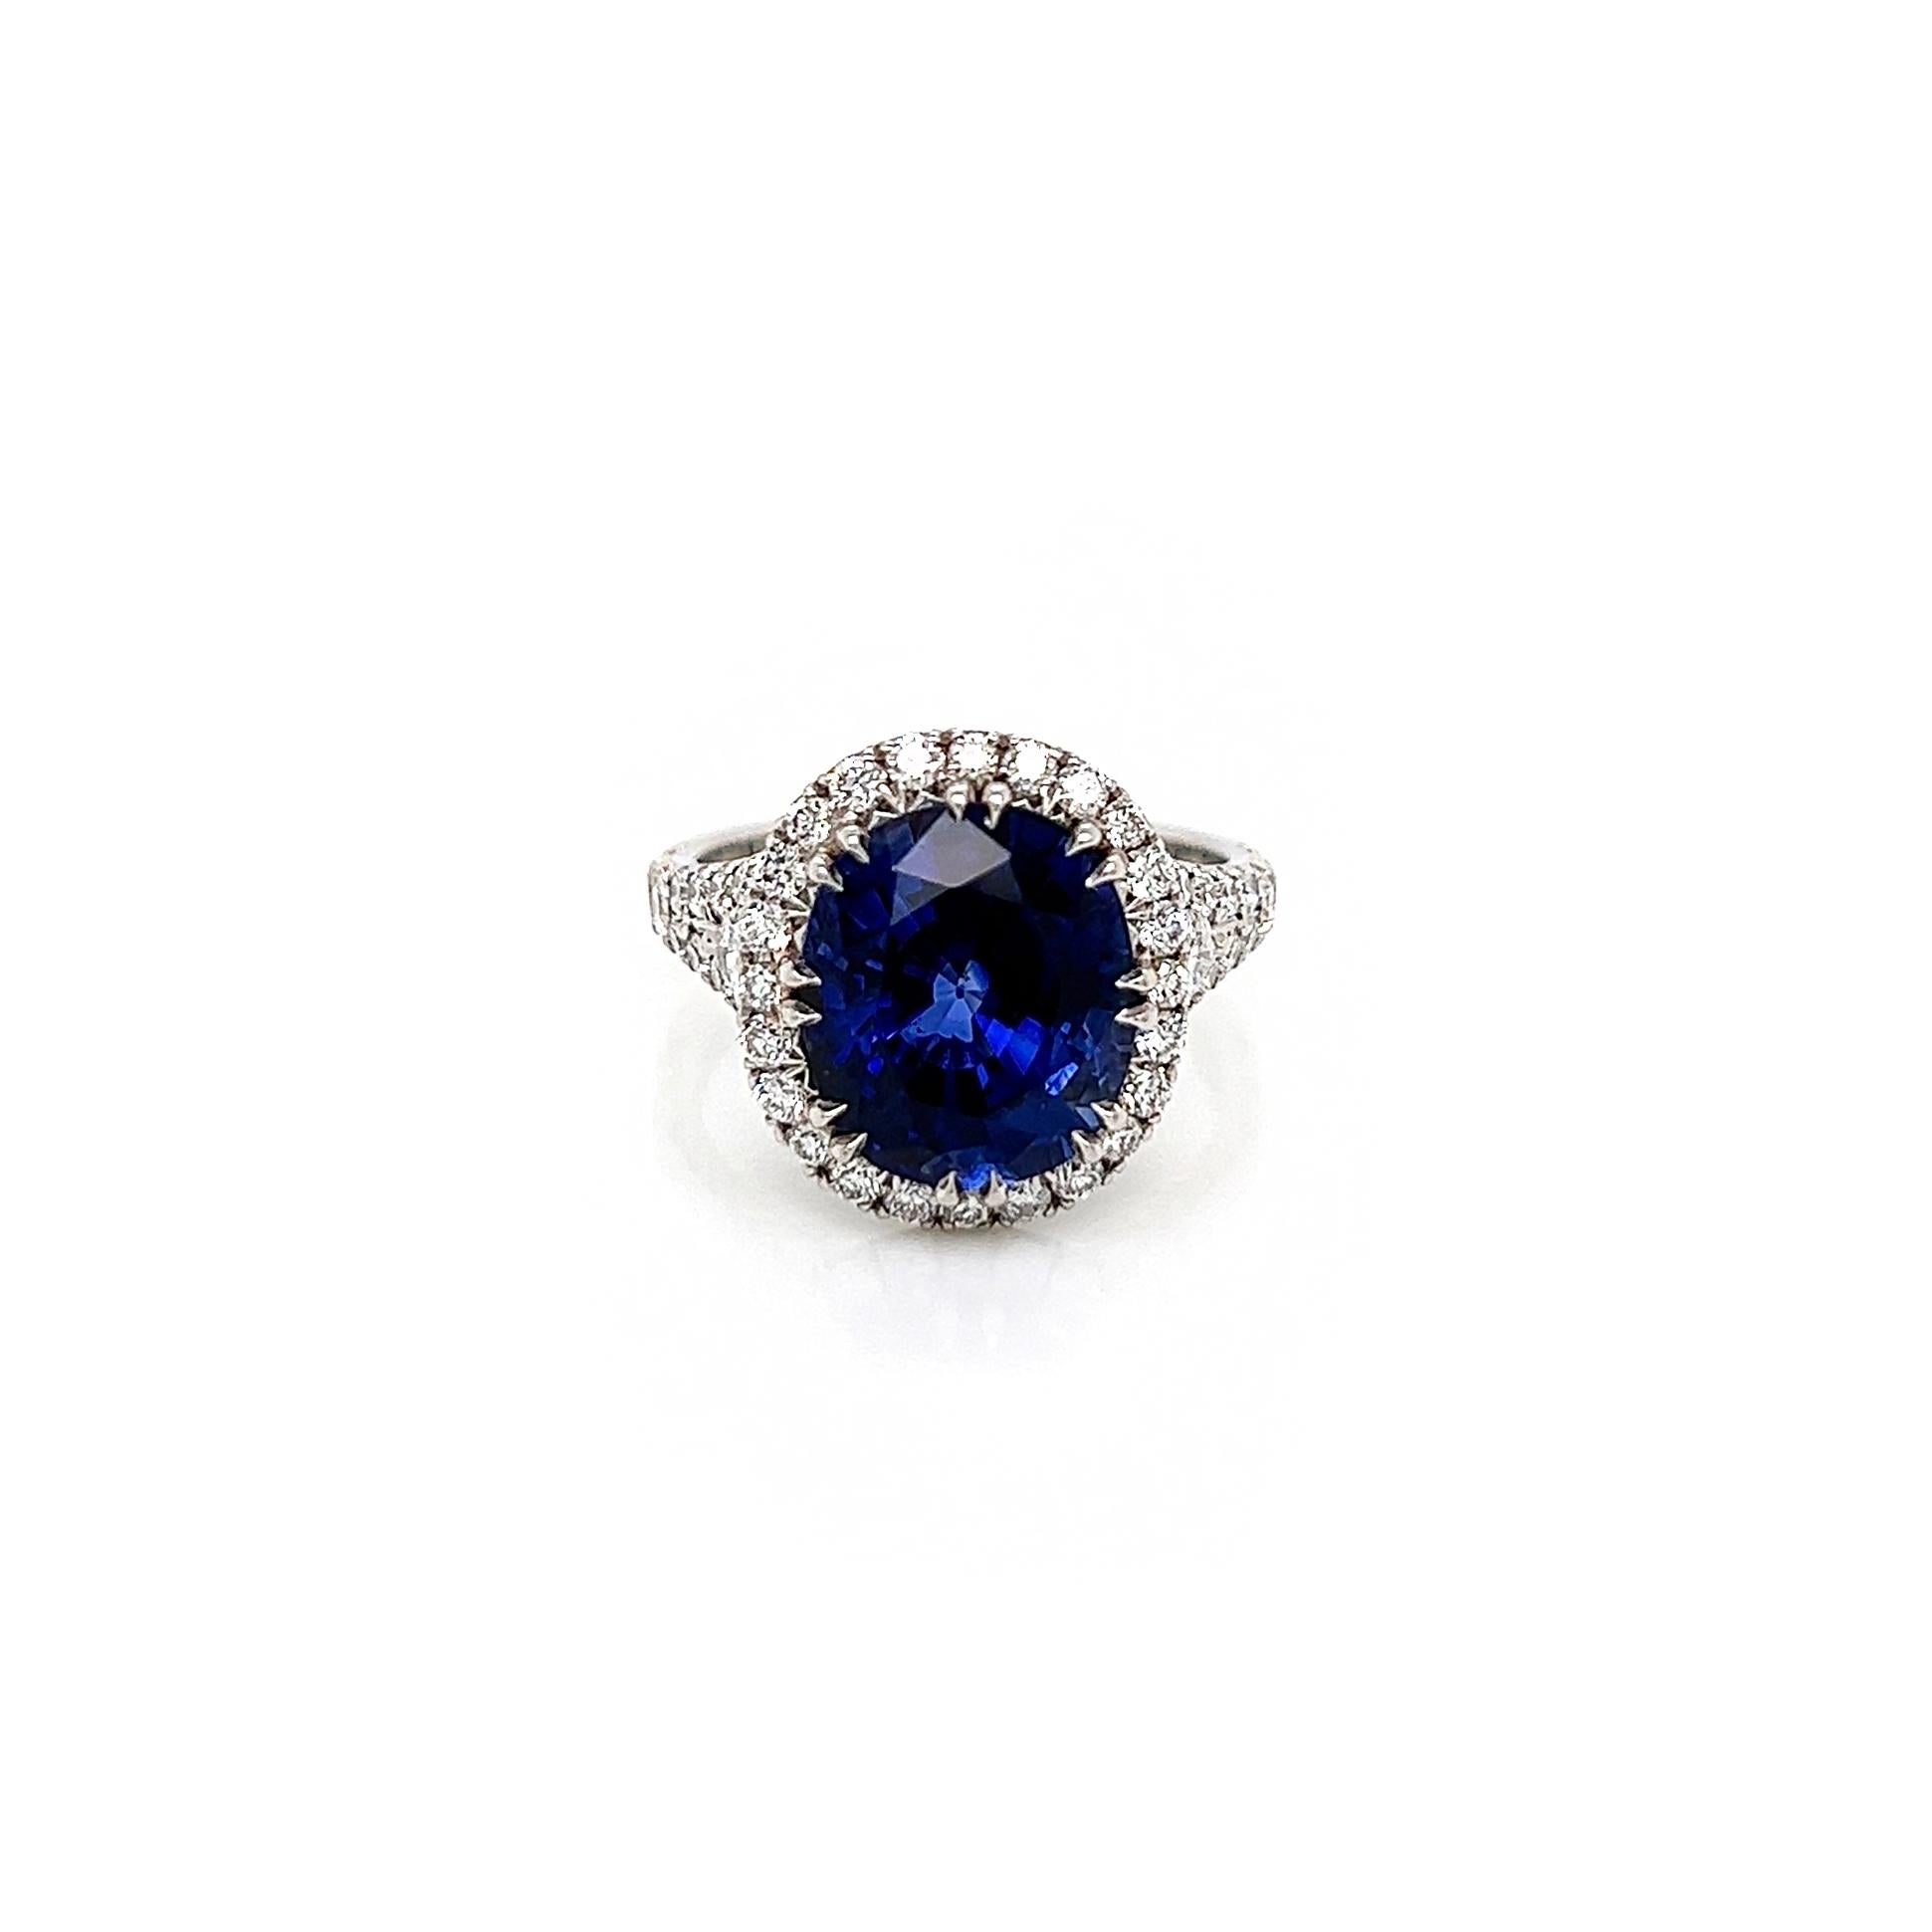 7.50 Total Carat Sapphire and Diamond Halo Pave-Set Ladies Ring. GIA Certified.

-Metal Type: Platinum
-6.49 Carat Oval Cut Natural Blue Sapphire, GIA Certified. Geographic origin - Madagascar
-Sapphire Measurements: 11.22 x 9.67 x 7.10 mm 
-1.01